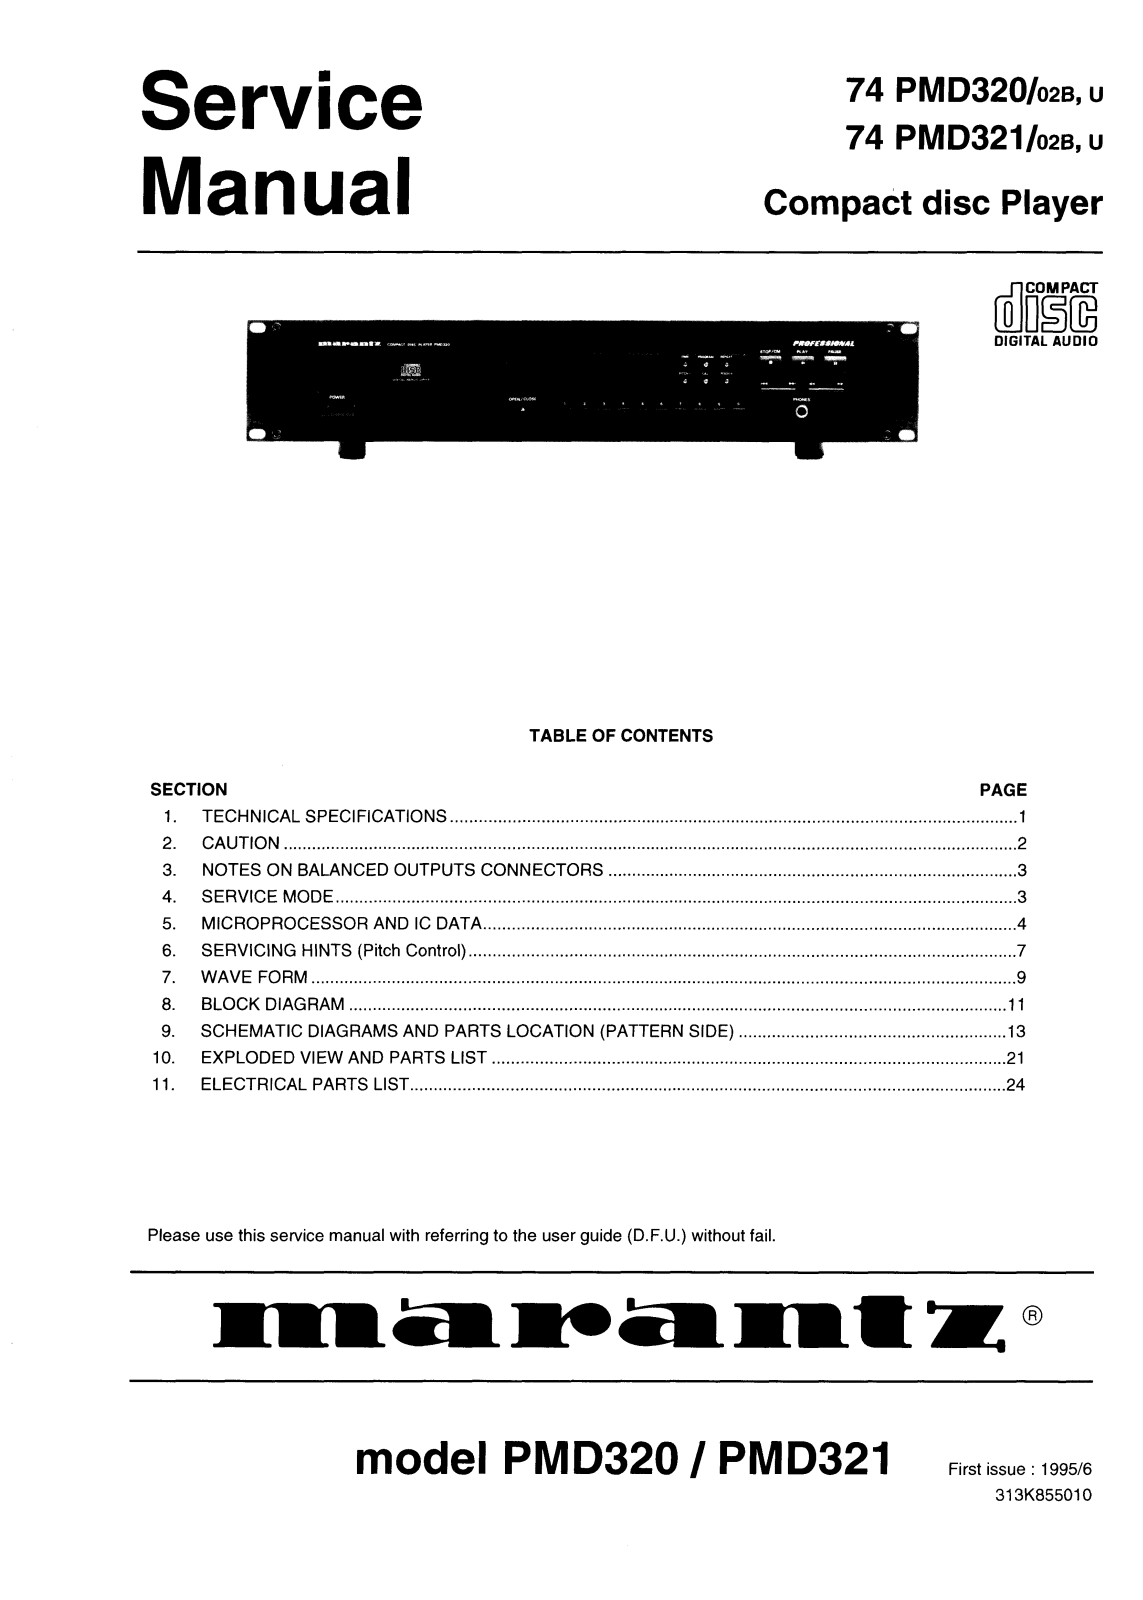 Marantz PMD-321, PMD-320 Service Manual